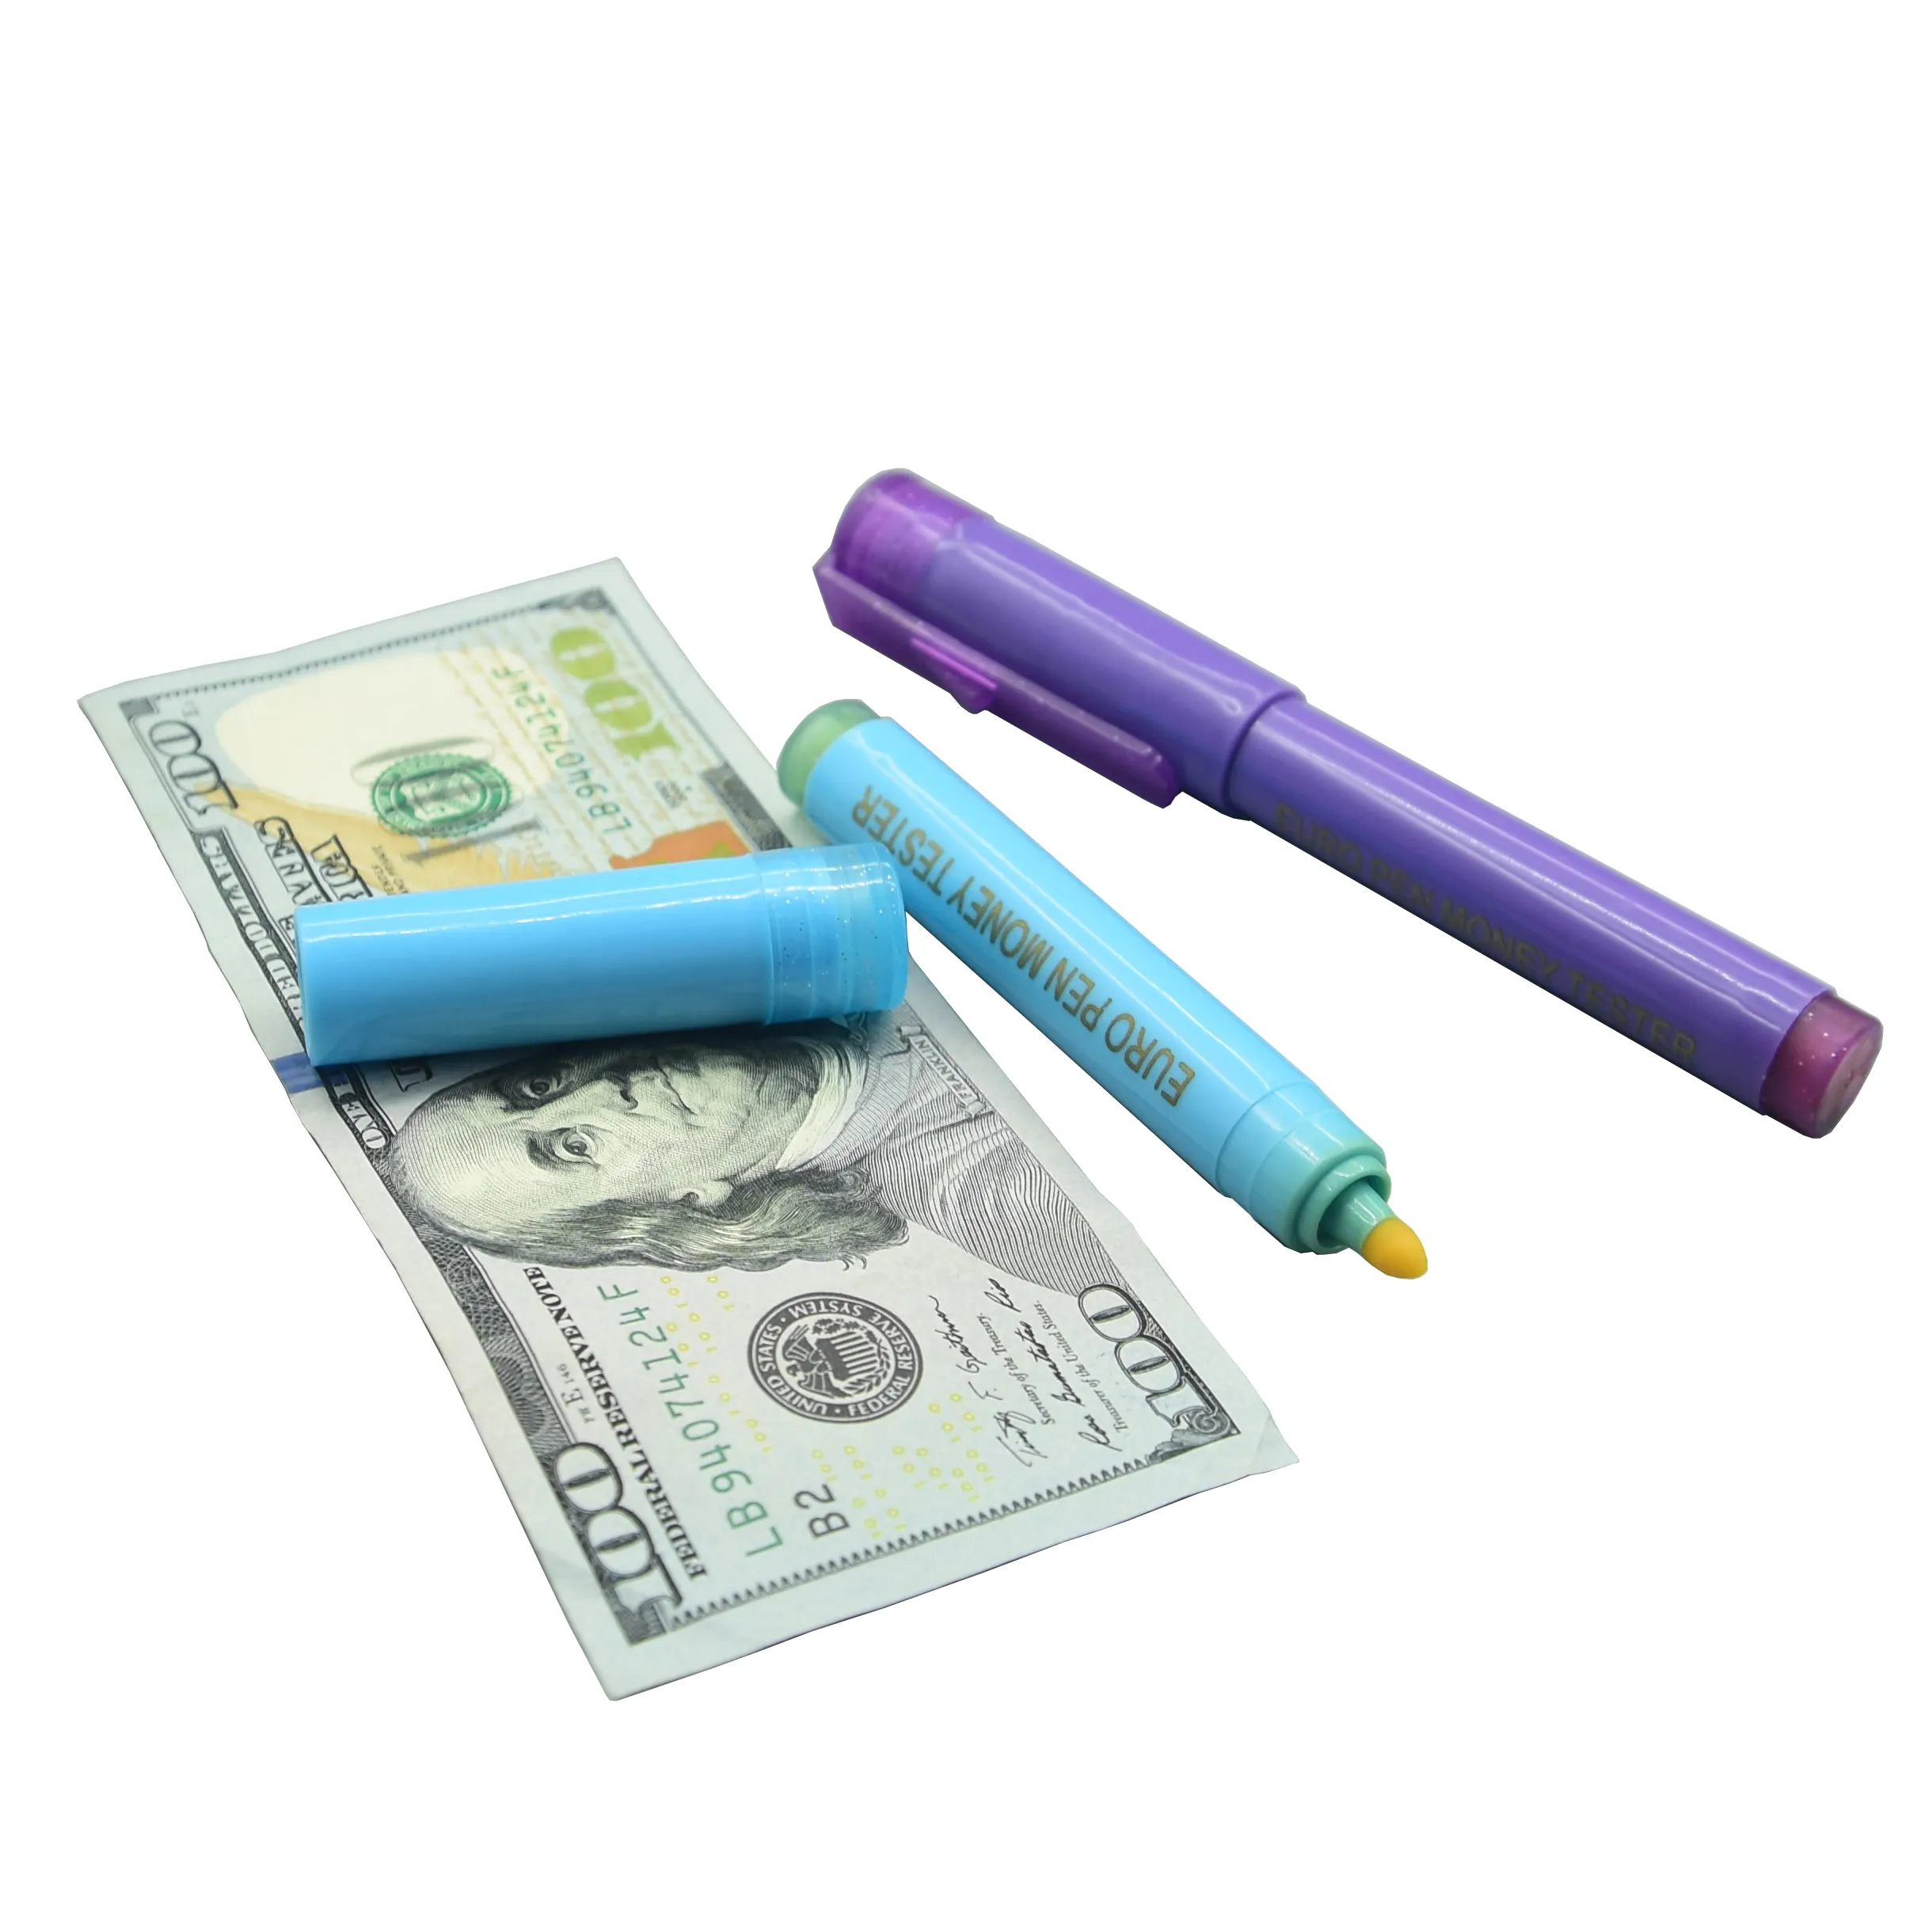 Money detector light pen UV invisible ink light pen multi-functional magic pen can print logo